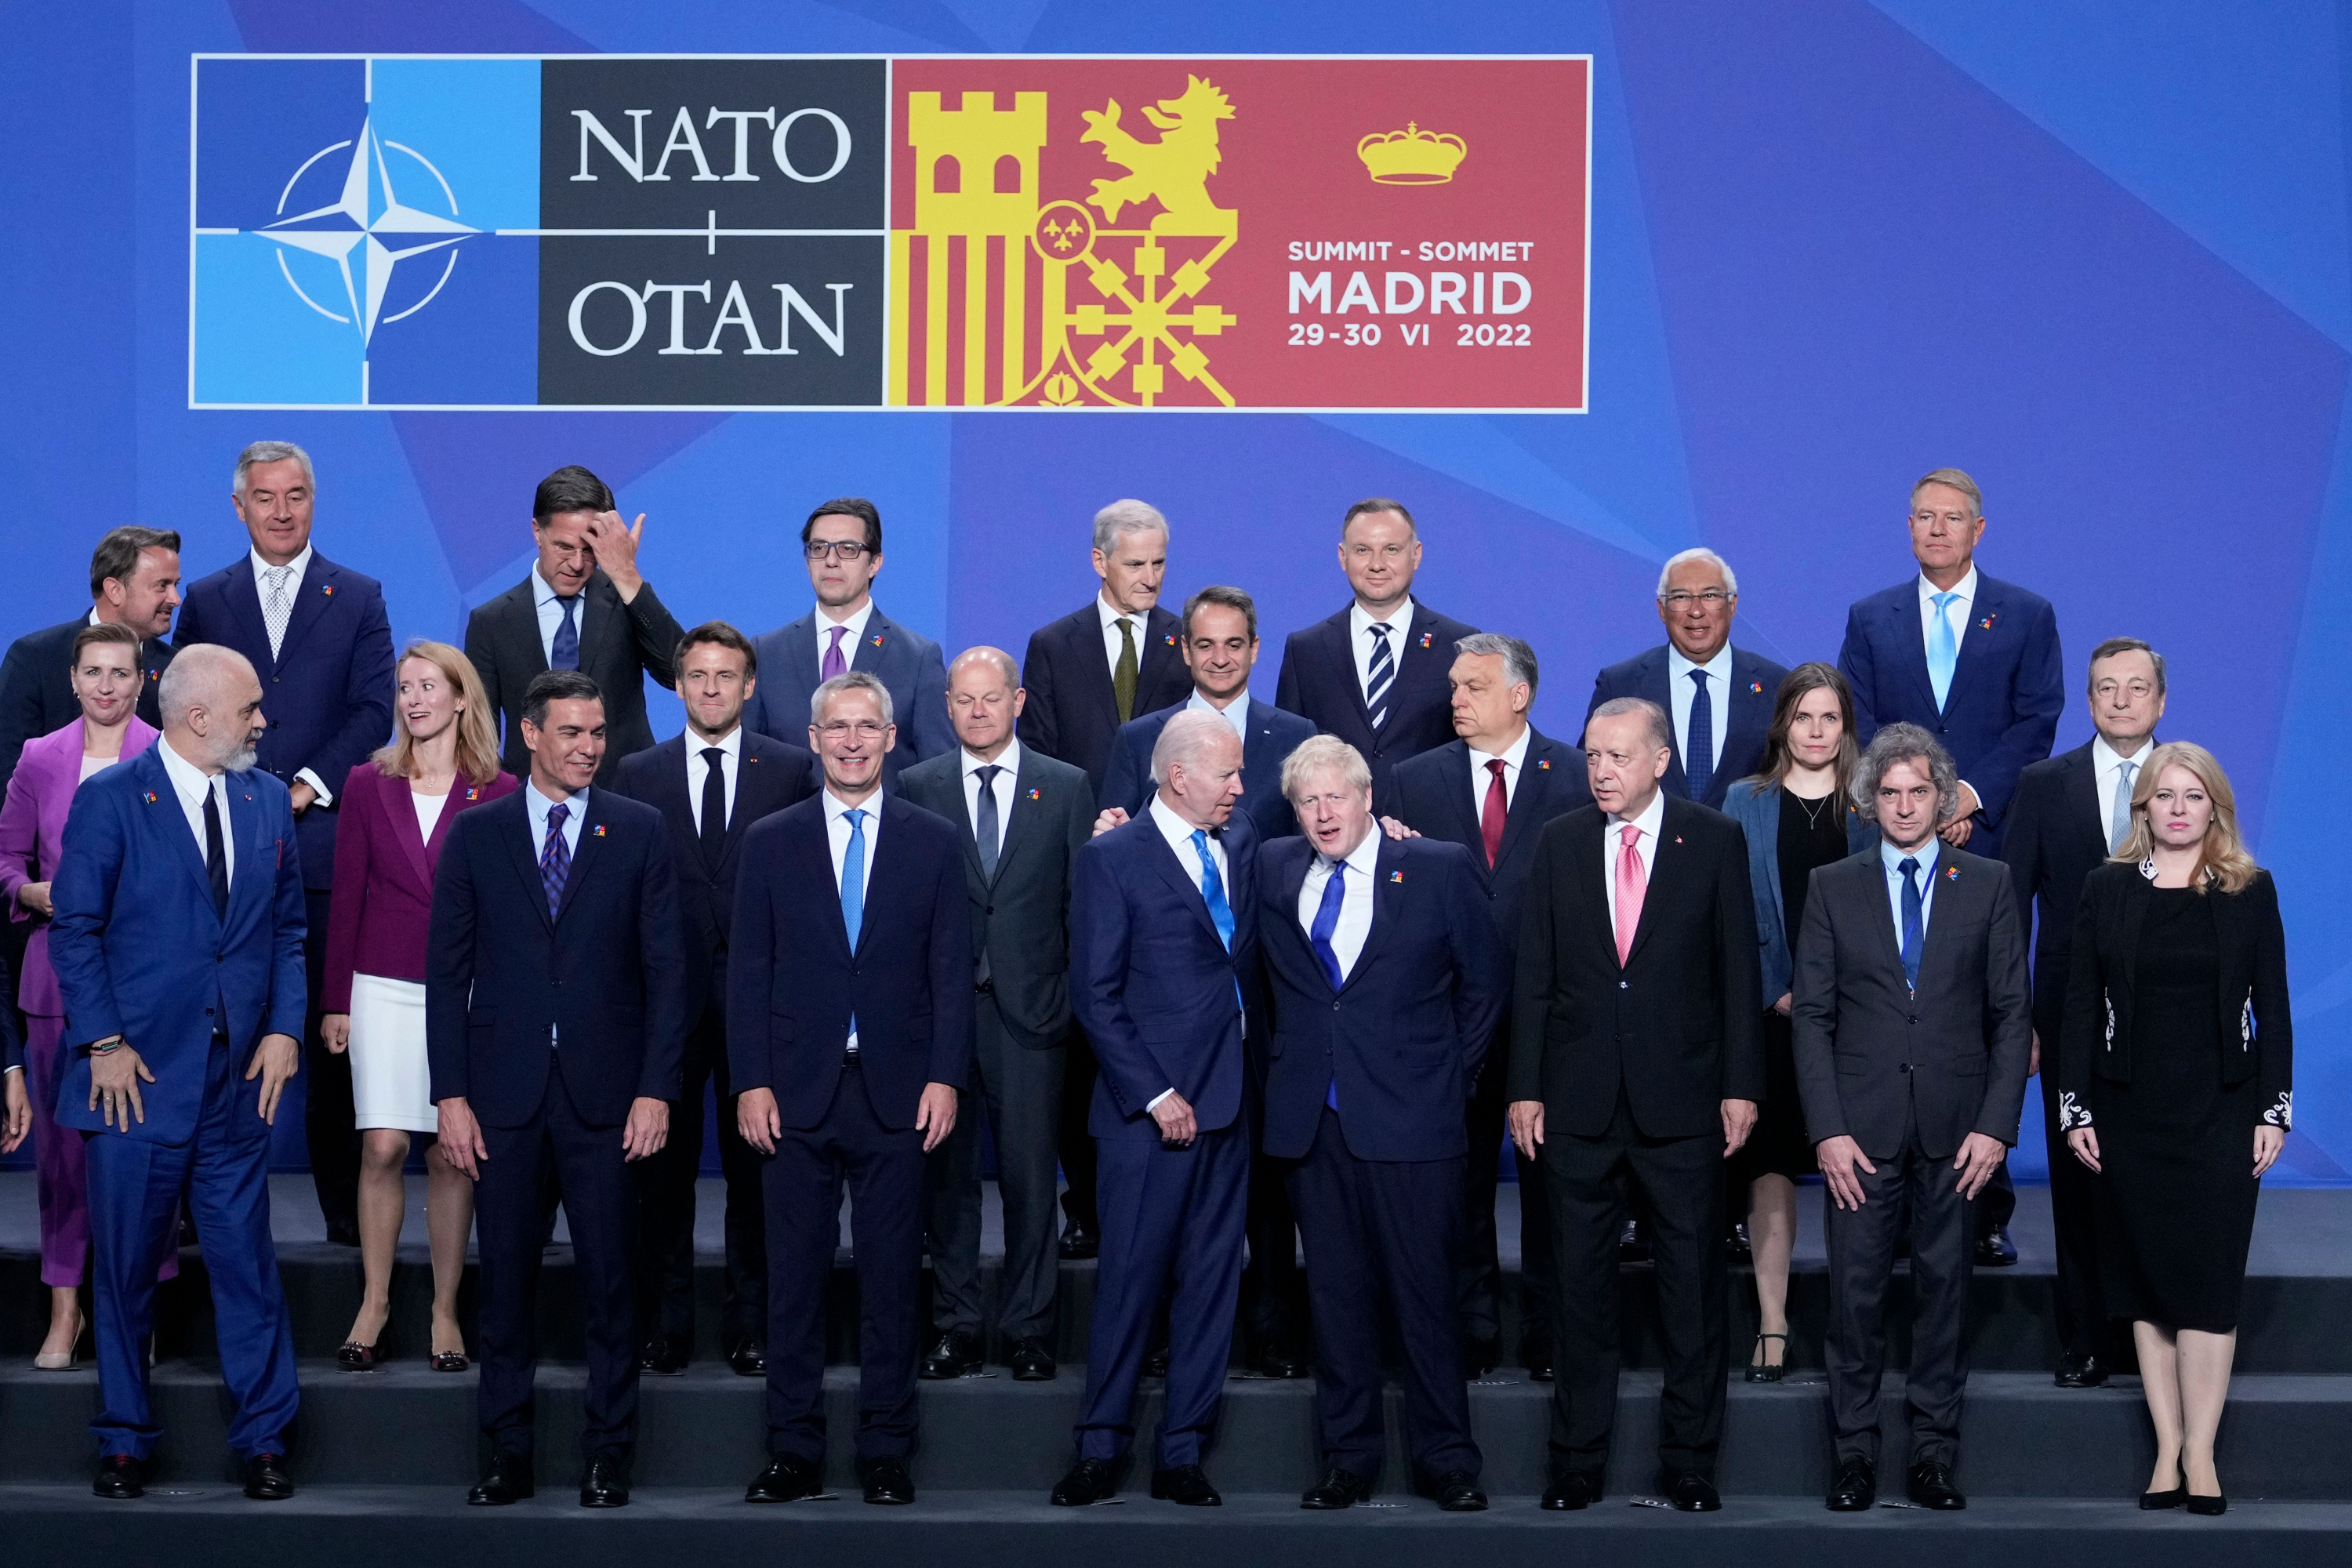 Россия и коллективный запад. Пражский саммит НАТО 2002. Гарибашвили НАТО саммит. Участники саммита НАТО 2022. Саммит Россия НАТО.